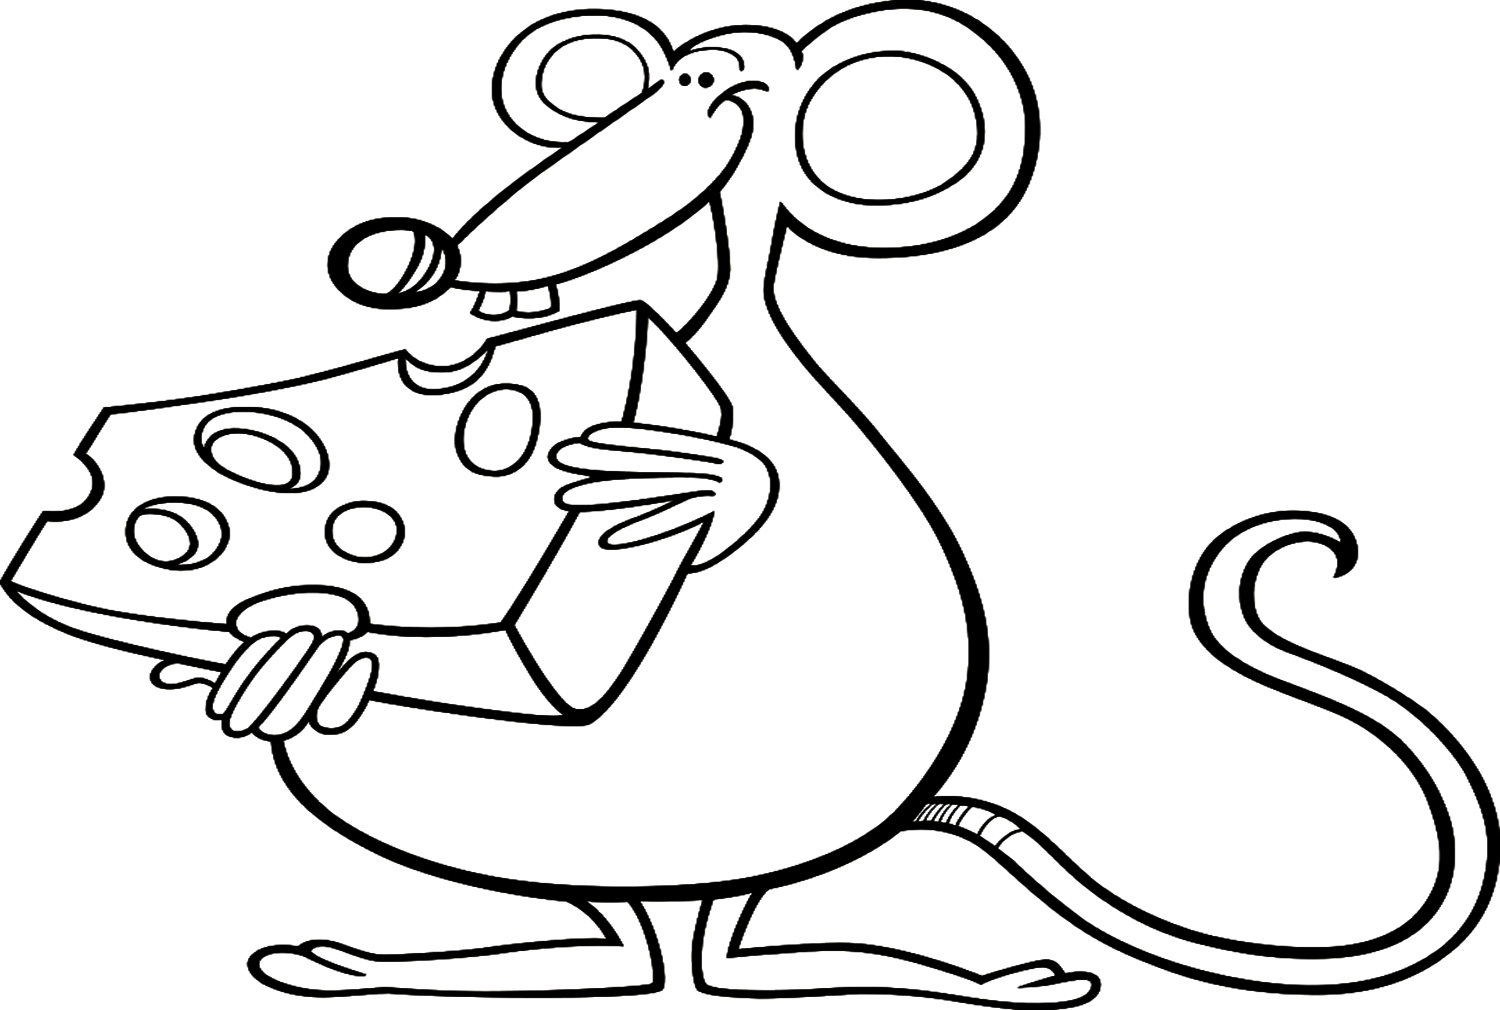 Мультяшная крыса с сыром от крысы